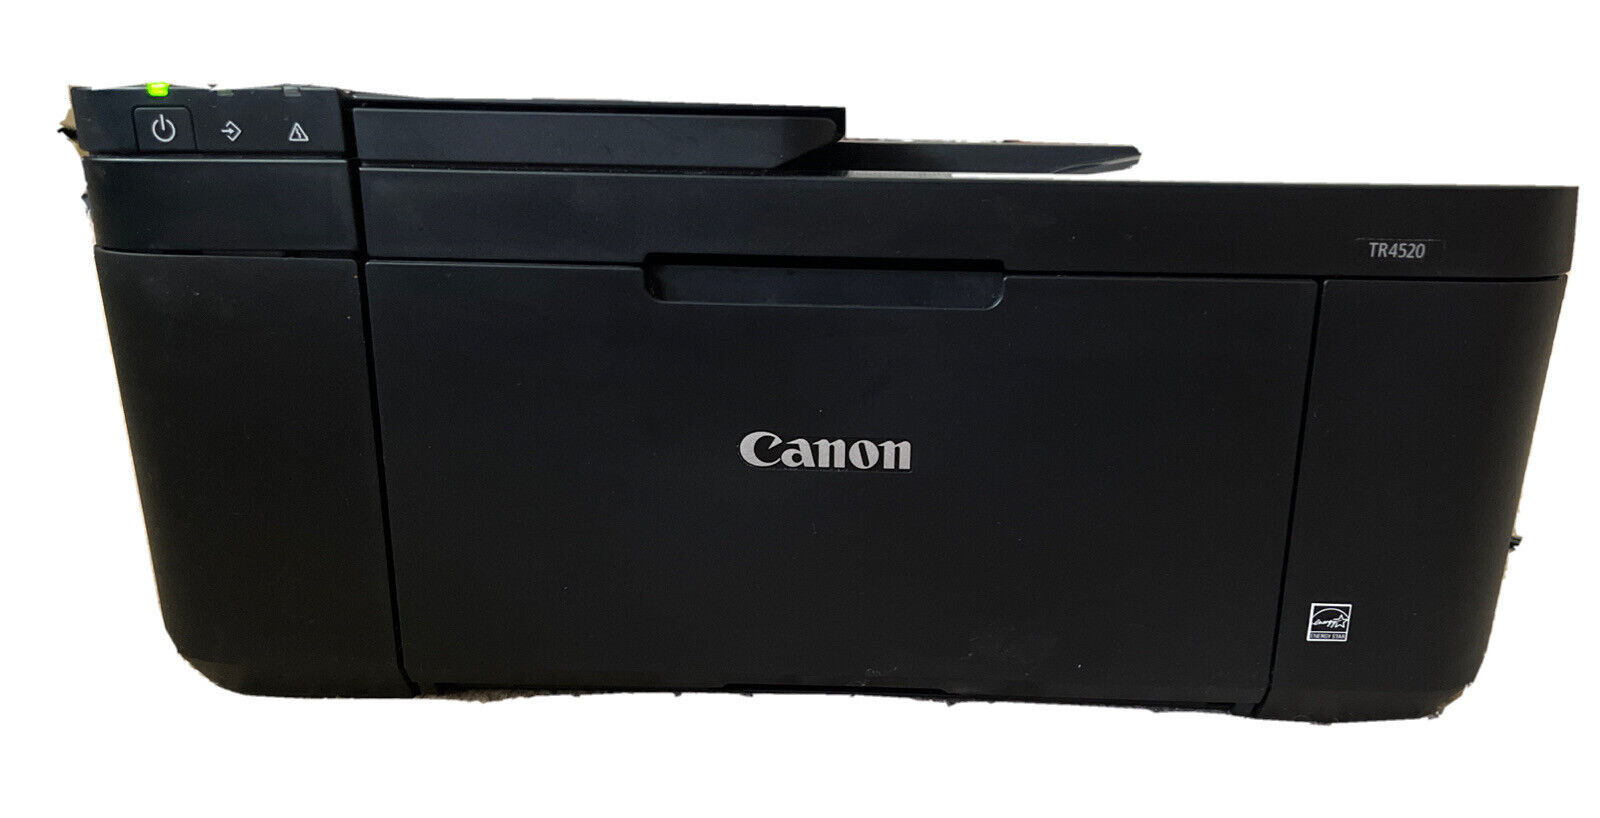 Canon - PIXMA TR4520 Wireless All-In-One Inkjet Printer - Black - TESTED EUC